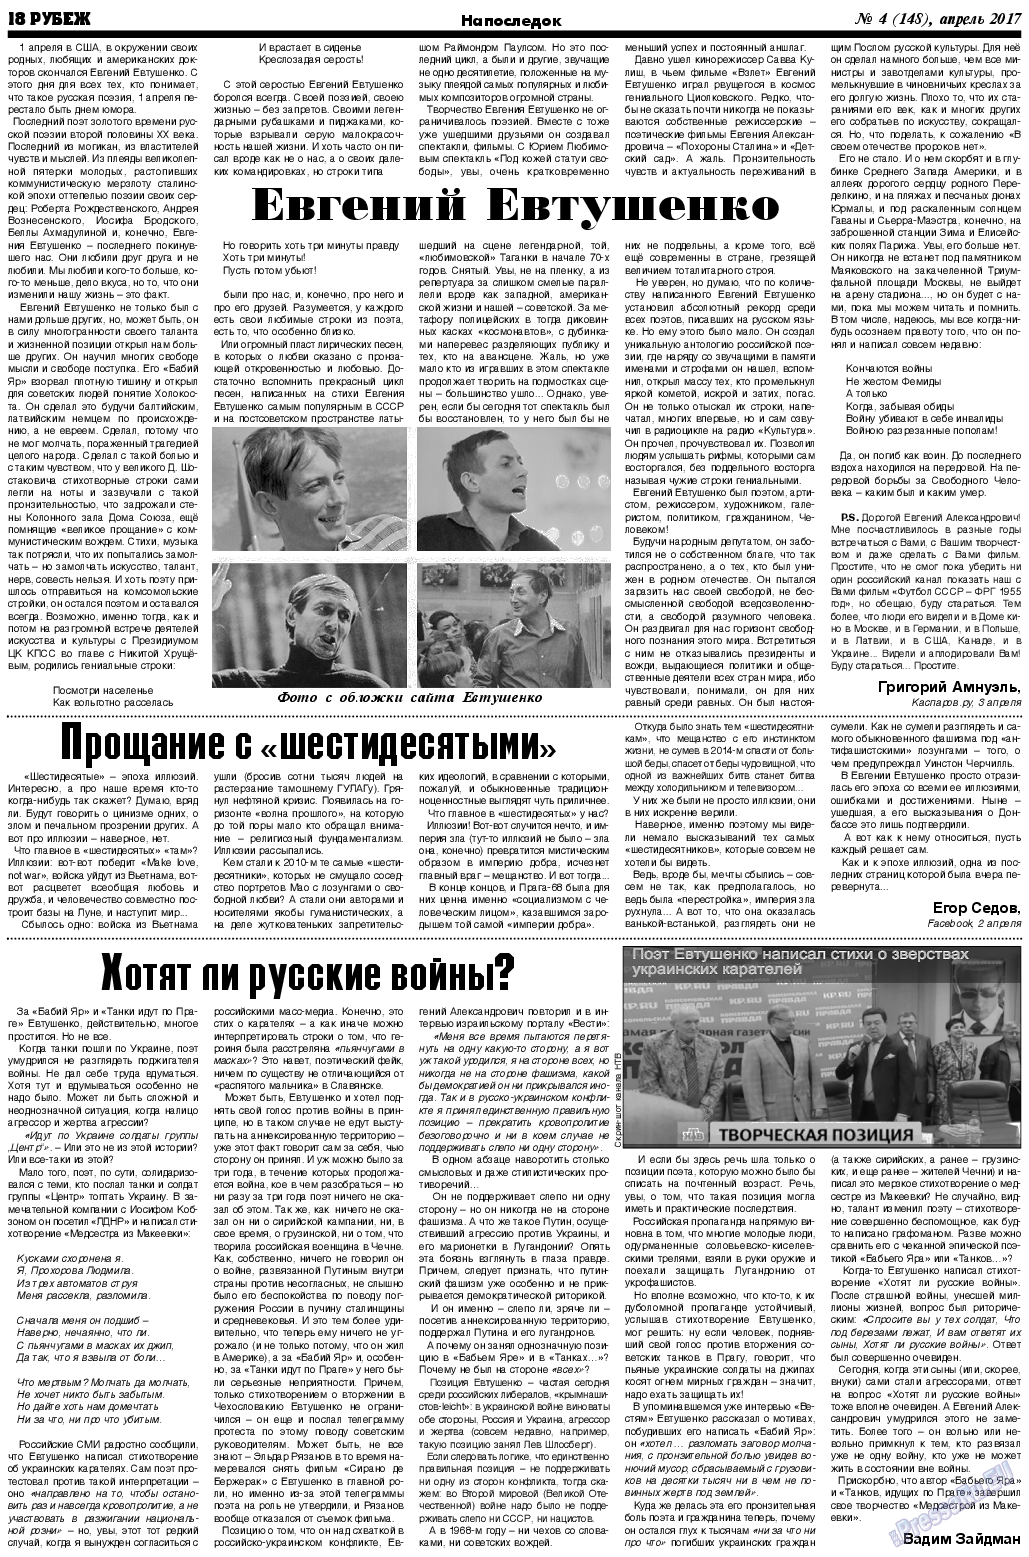 Рубеж, газета. 2017 №4 стр.18